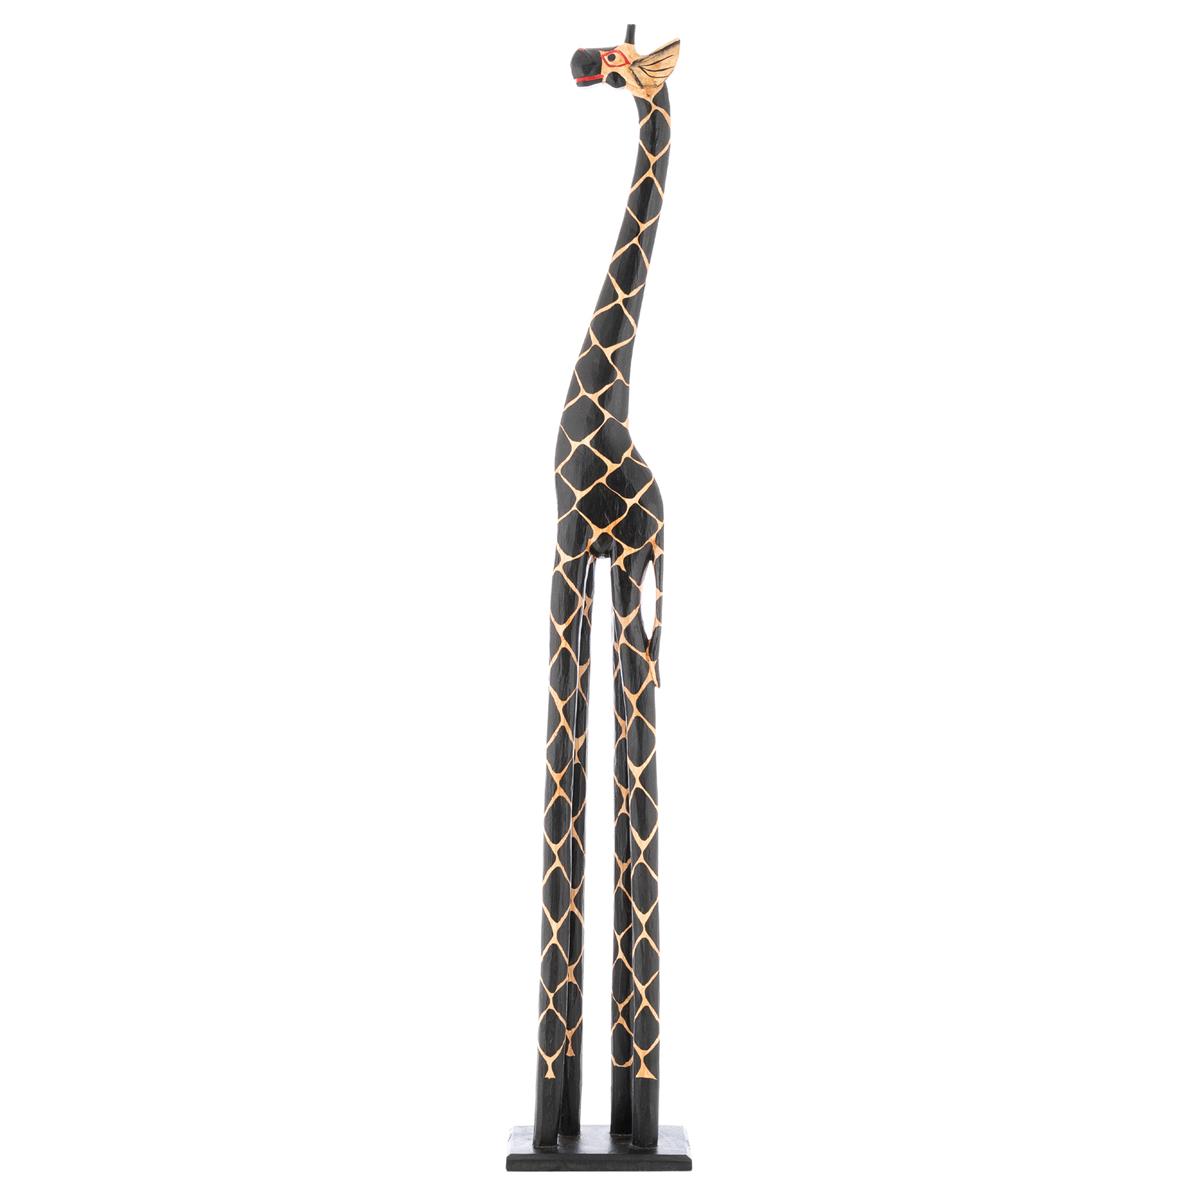 Deko Giraffe Holzfigur Skulptur Afrika Handarbeit Größe 150 cm dunkel